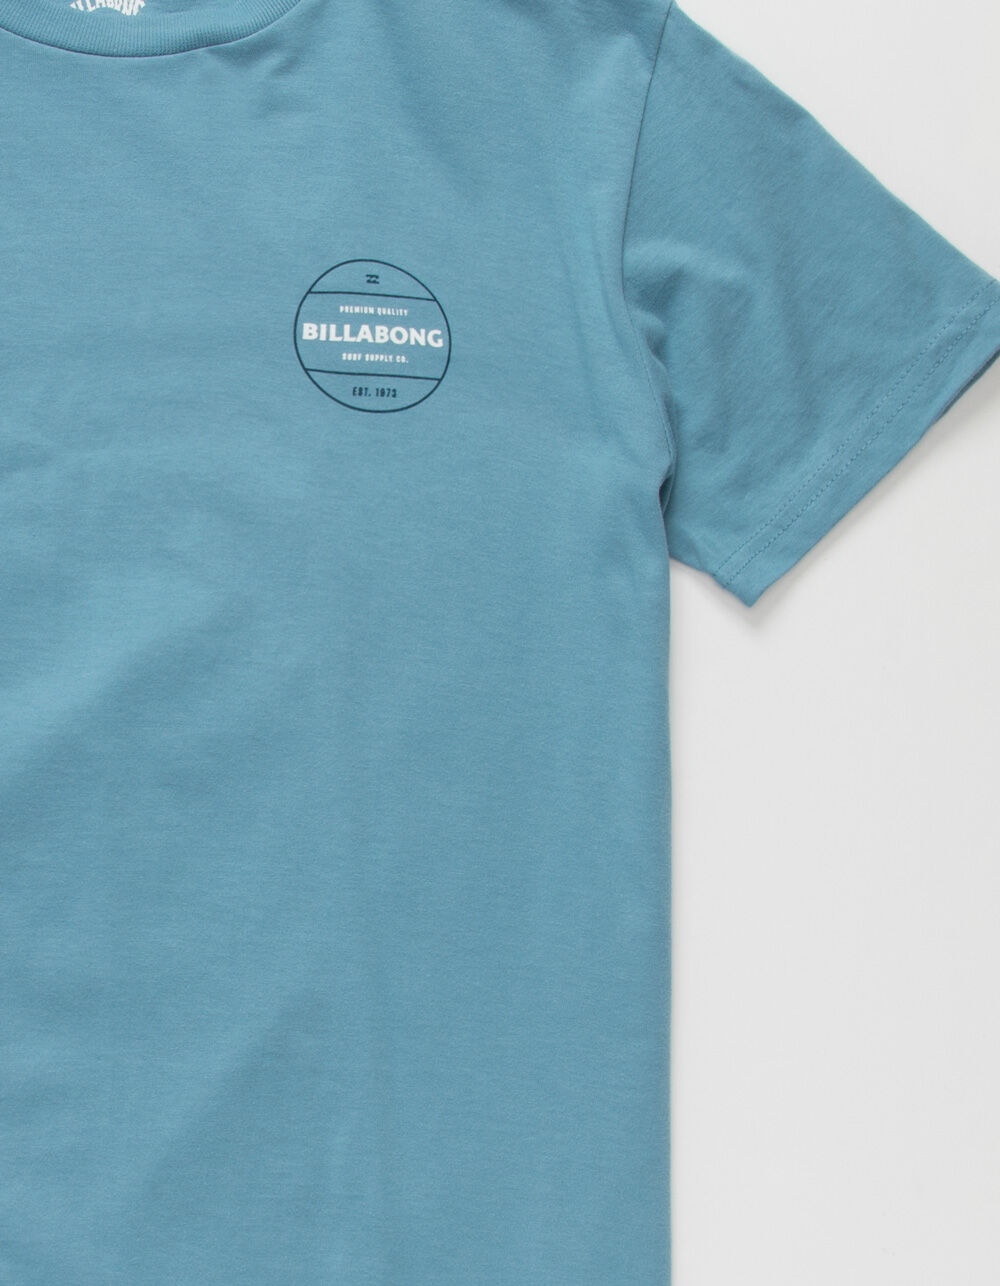 BILLABONG Rotor Boys T-Shirt - BABY BLUE | Tillys